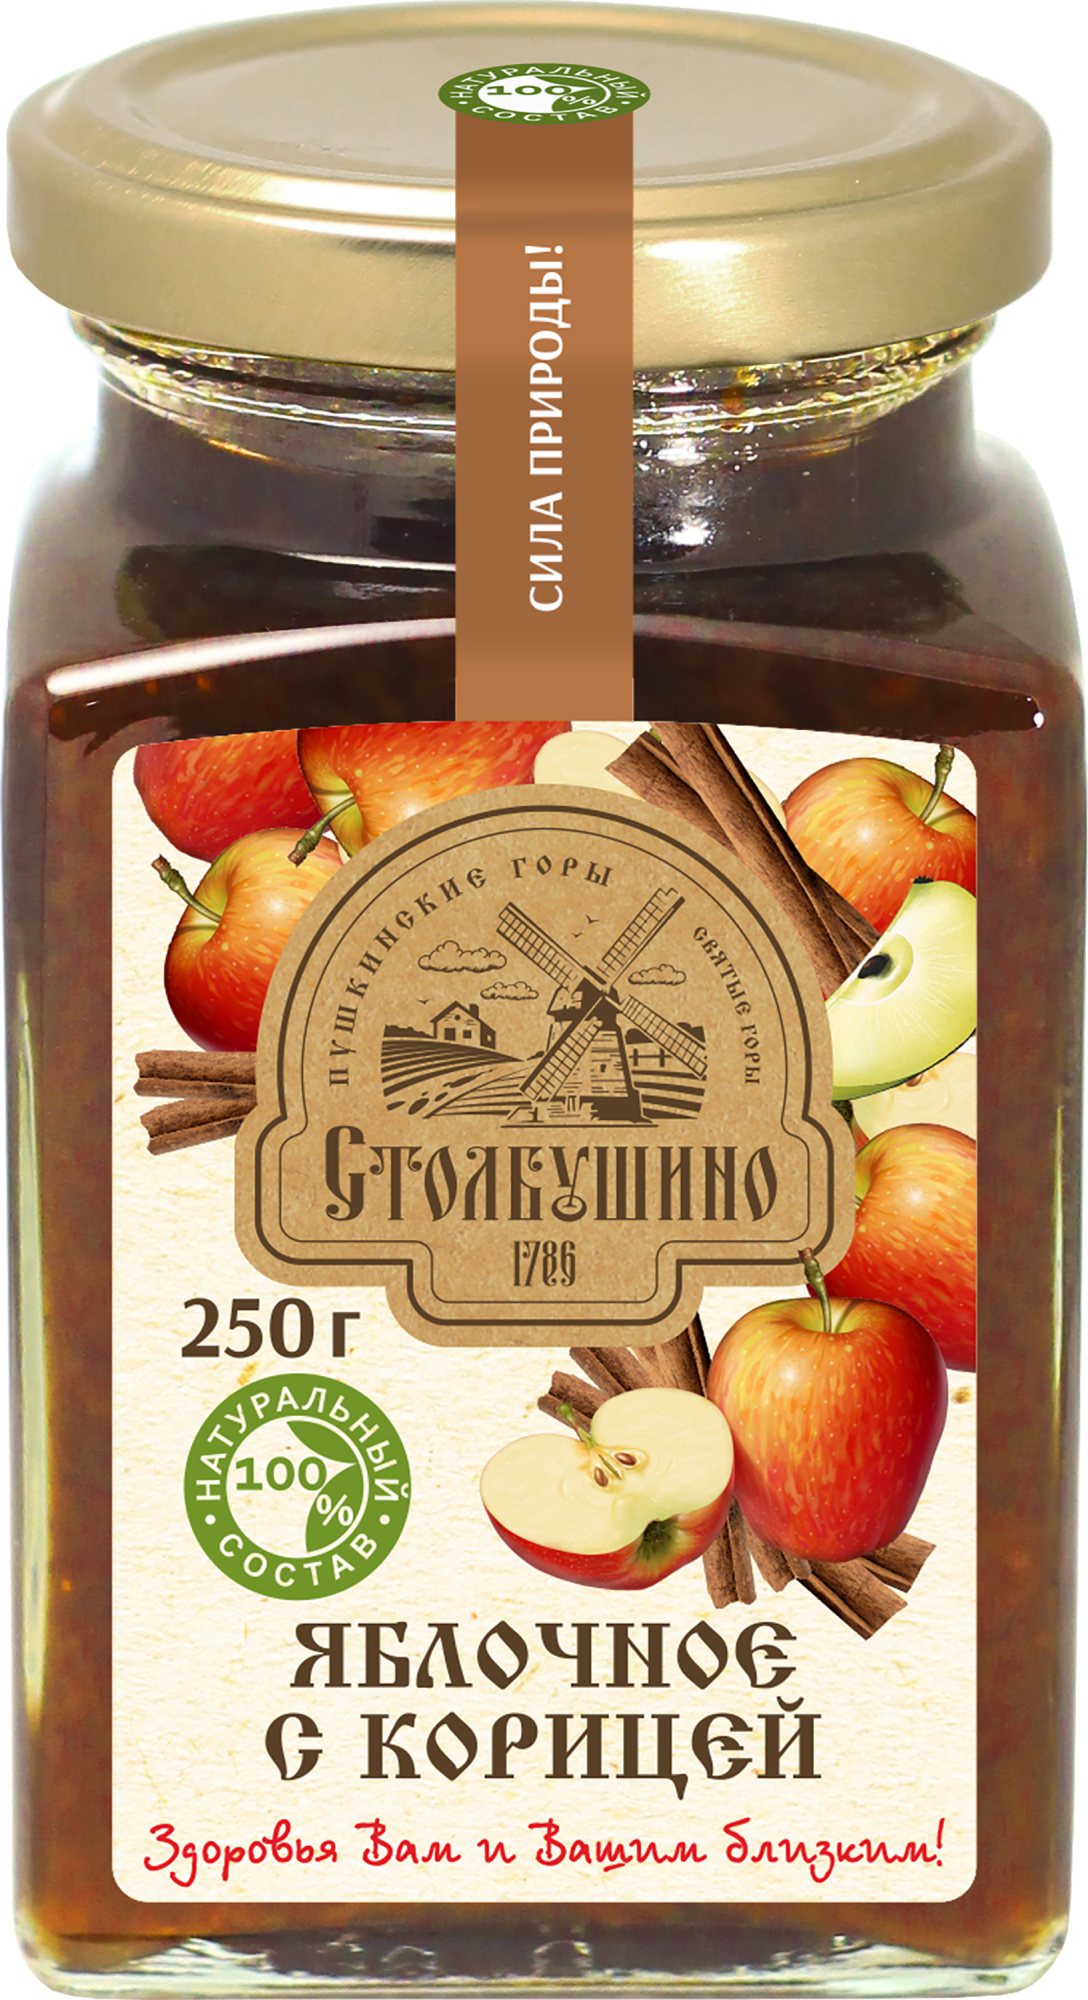 Stolbushinsky sterilisiert Apfel und Zimt Konfitüre.